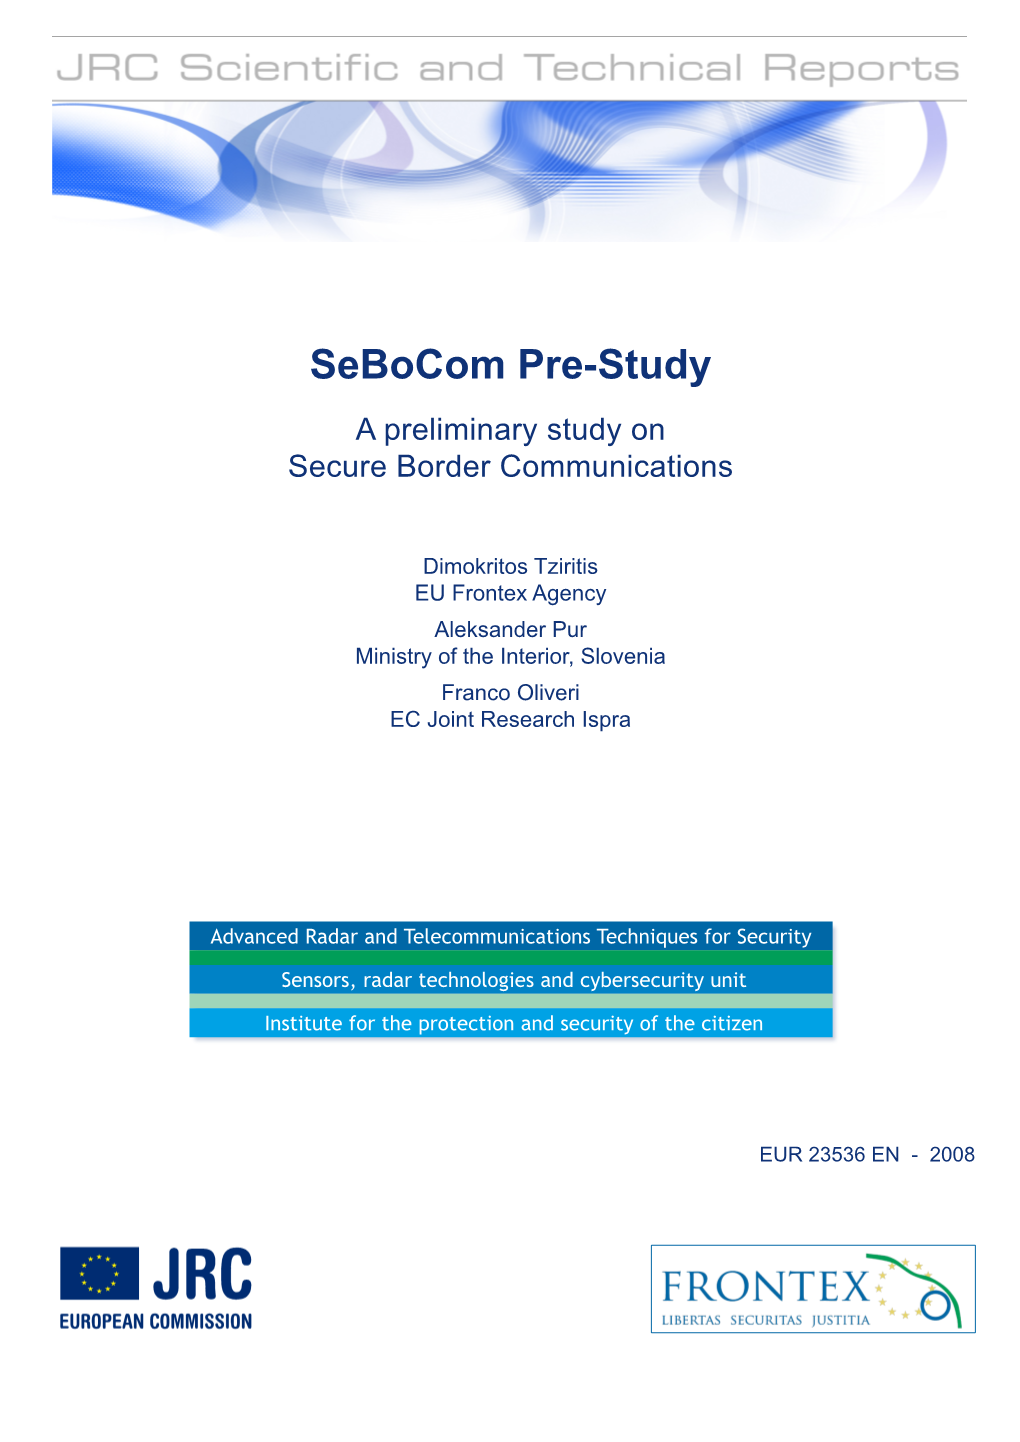 Sebocom Pre-Study a Preliminary Study on Secure Border Communications